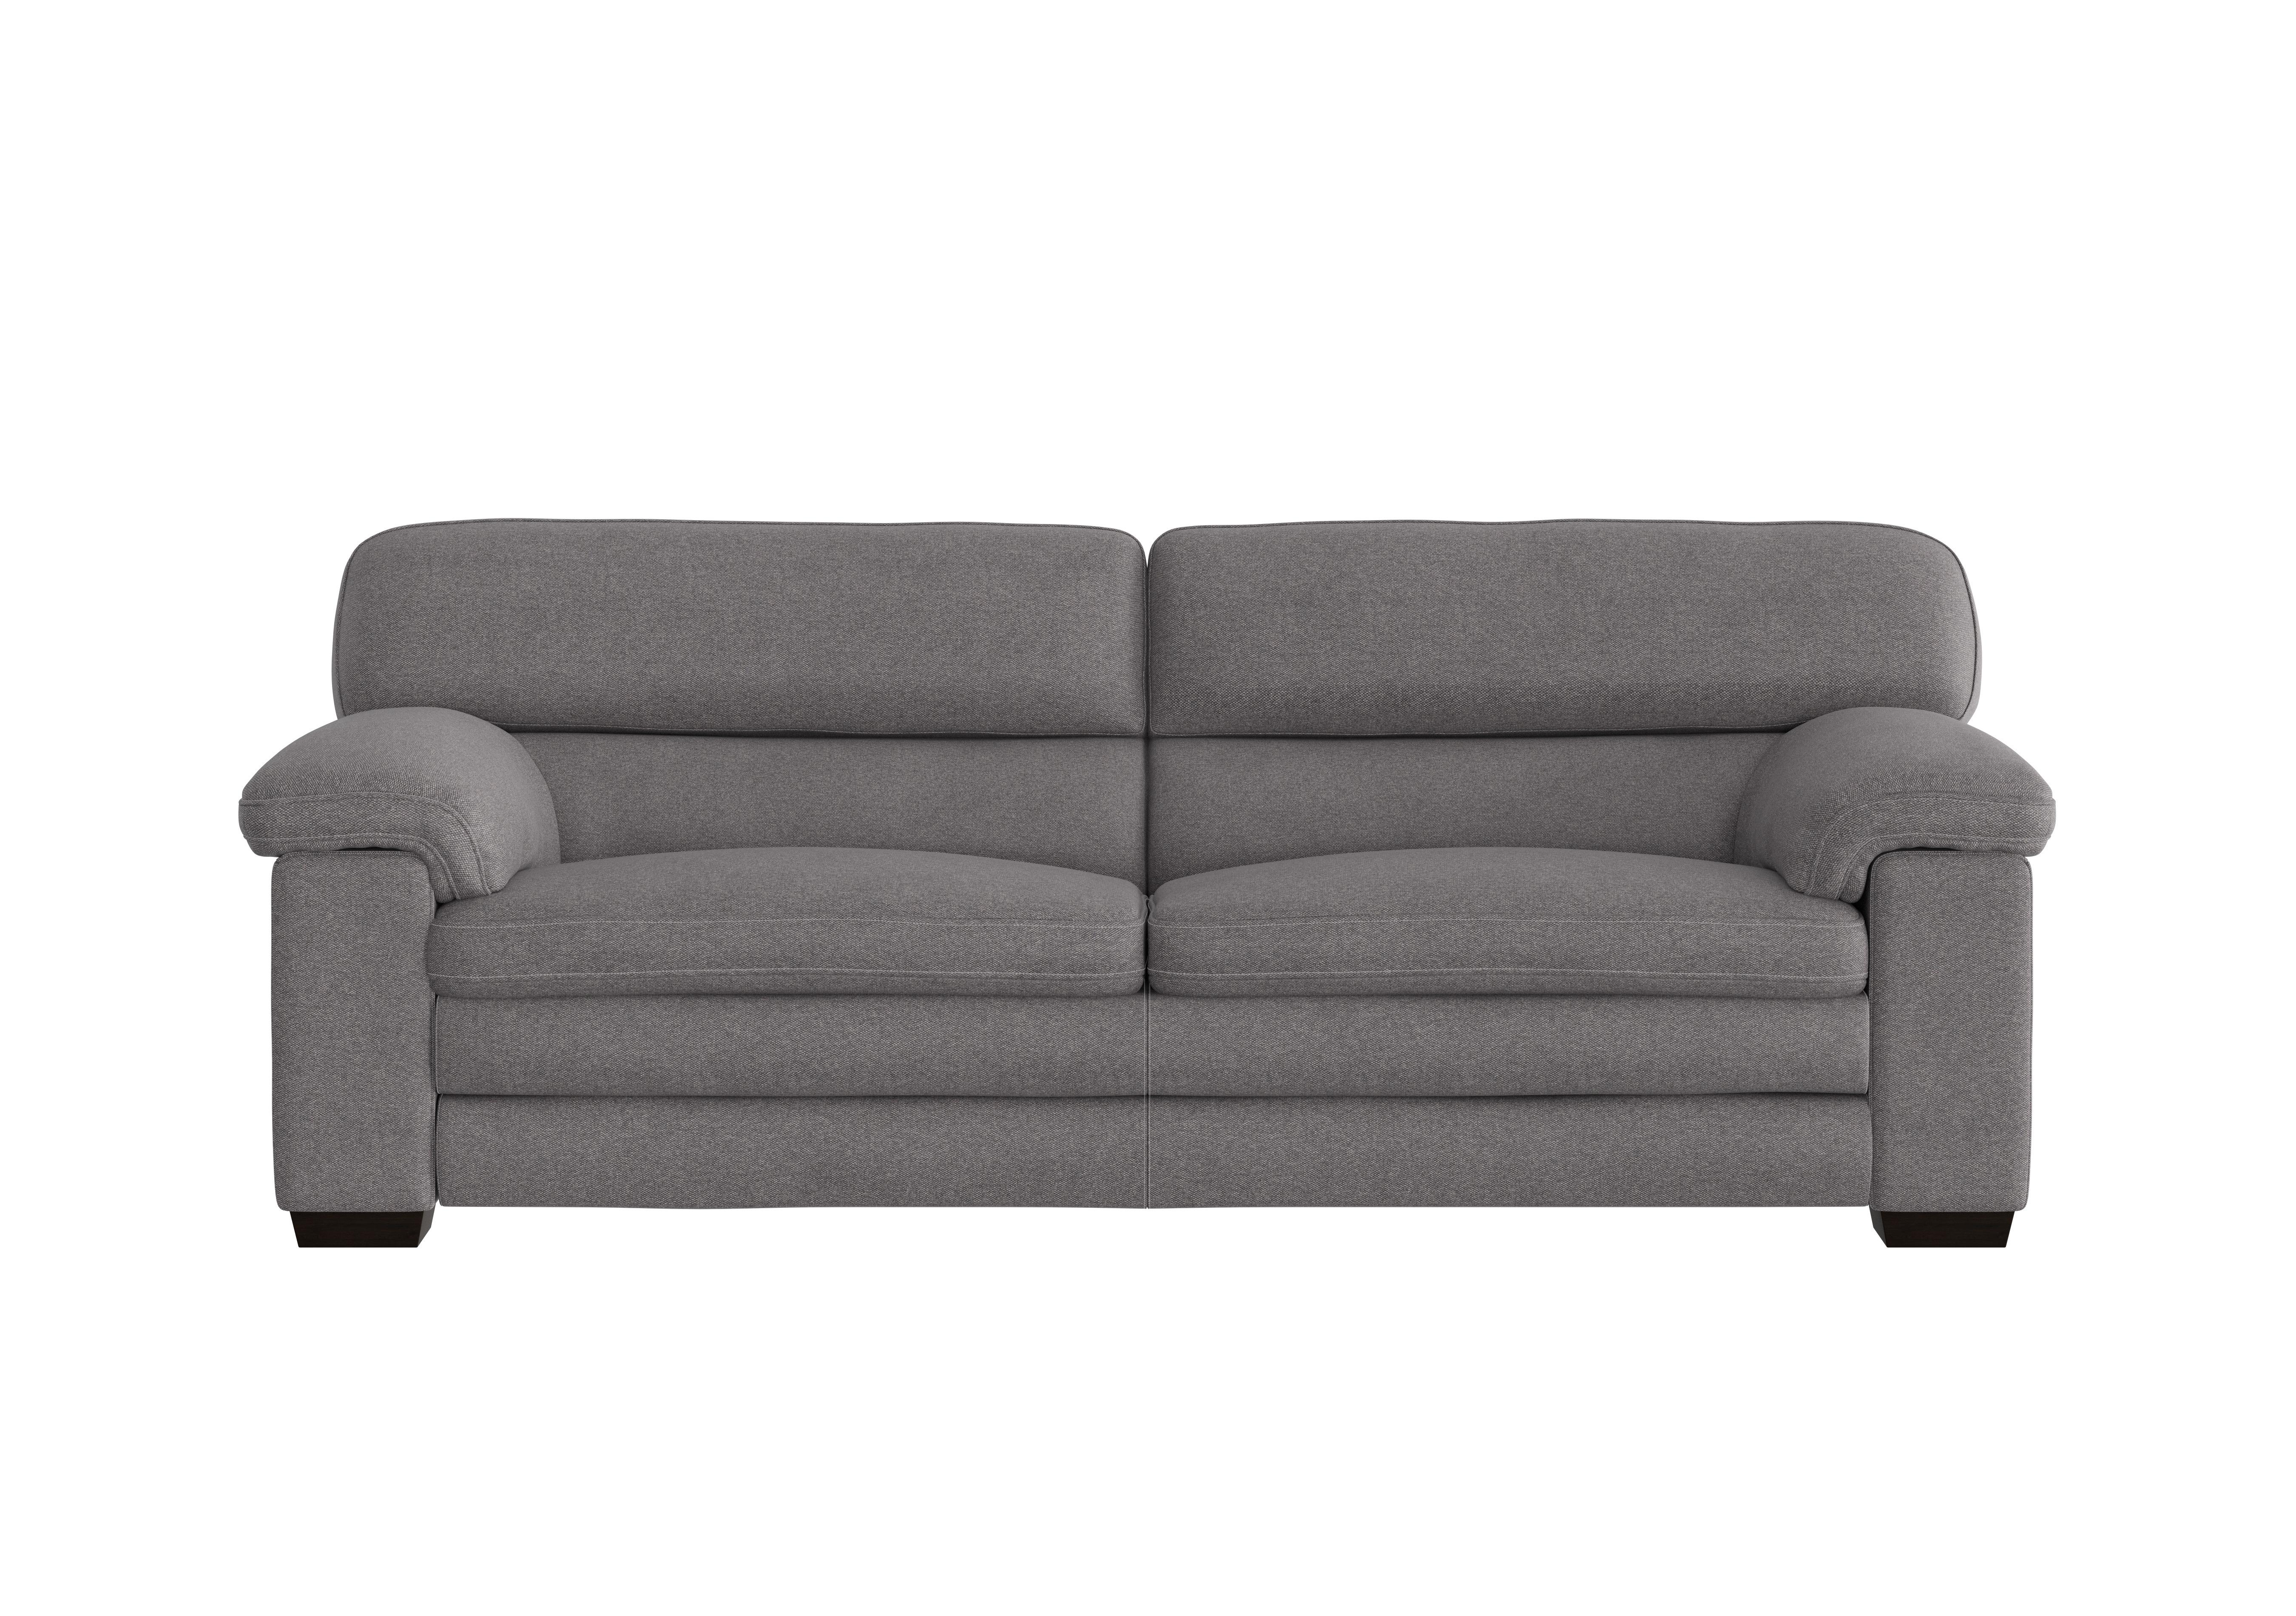 Cozee Fabric 3 Seater Sofa in Fab-Ska-R31 Charcoal Grey on Furniture Village